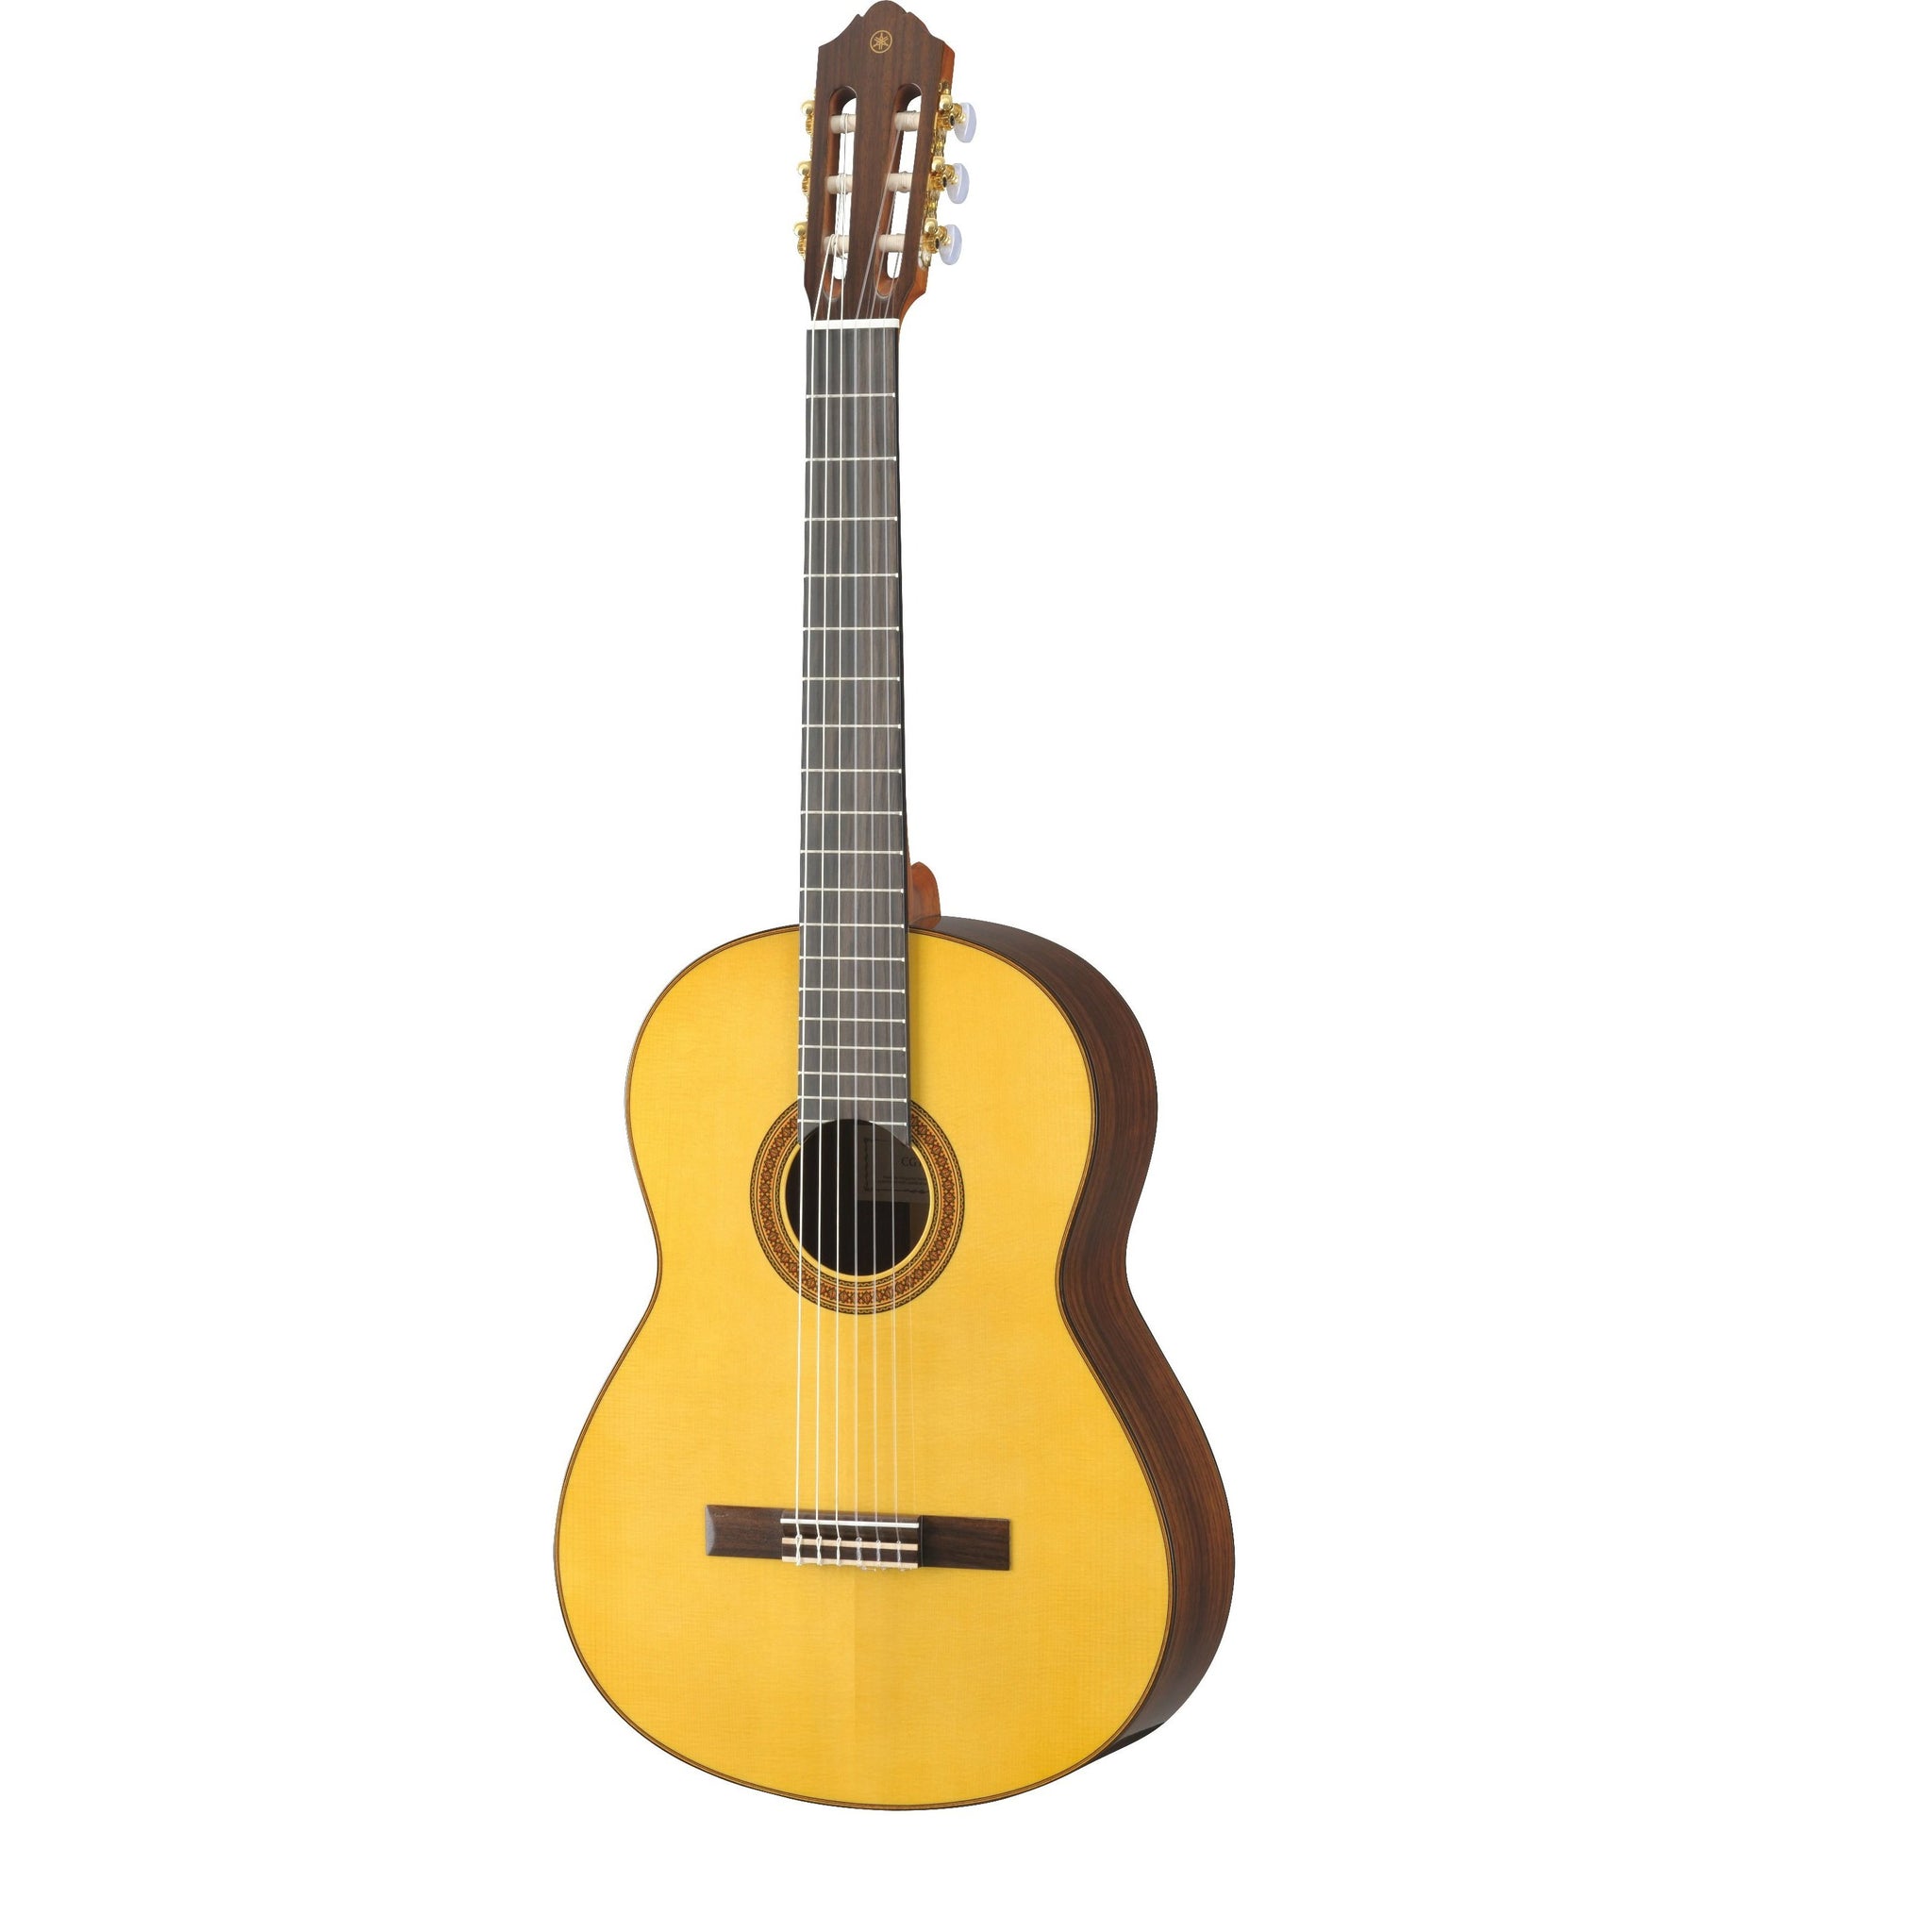 Yamaha CG182S CG Series European Spruce Top Classical Guitar-Natural-Music World Academy